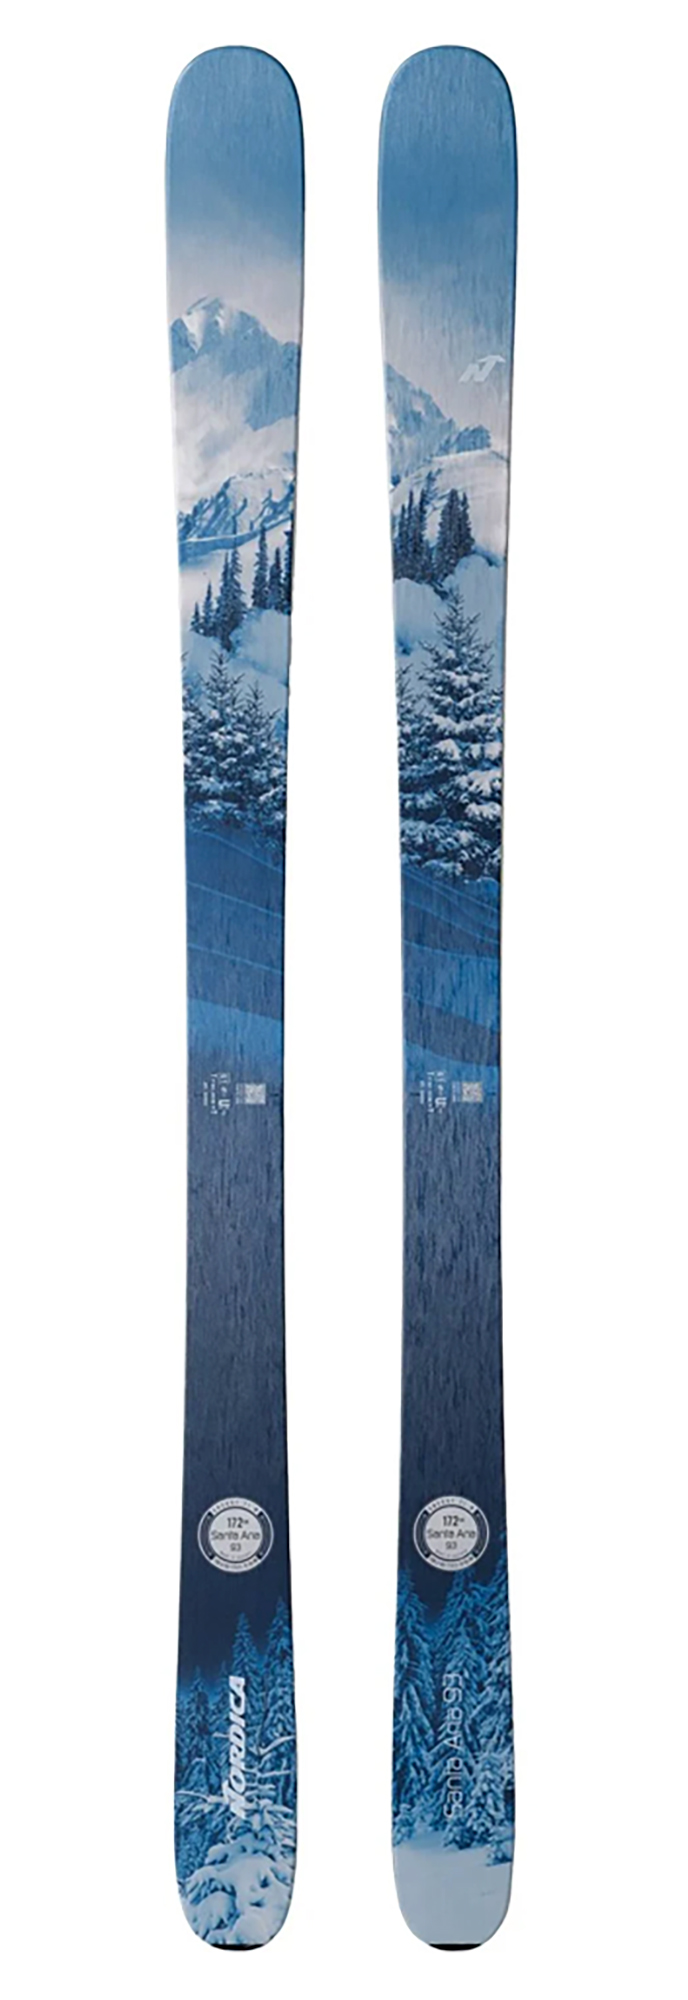 Vail Ski Packages Ski Clothes Rental Vail Ski Shop